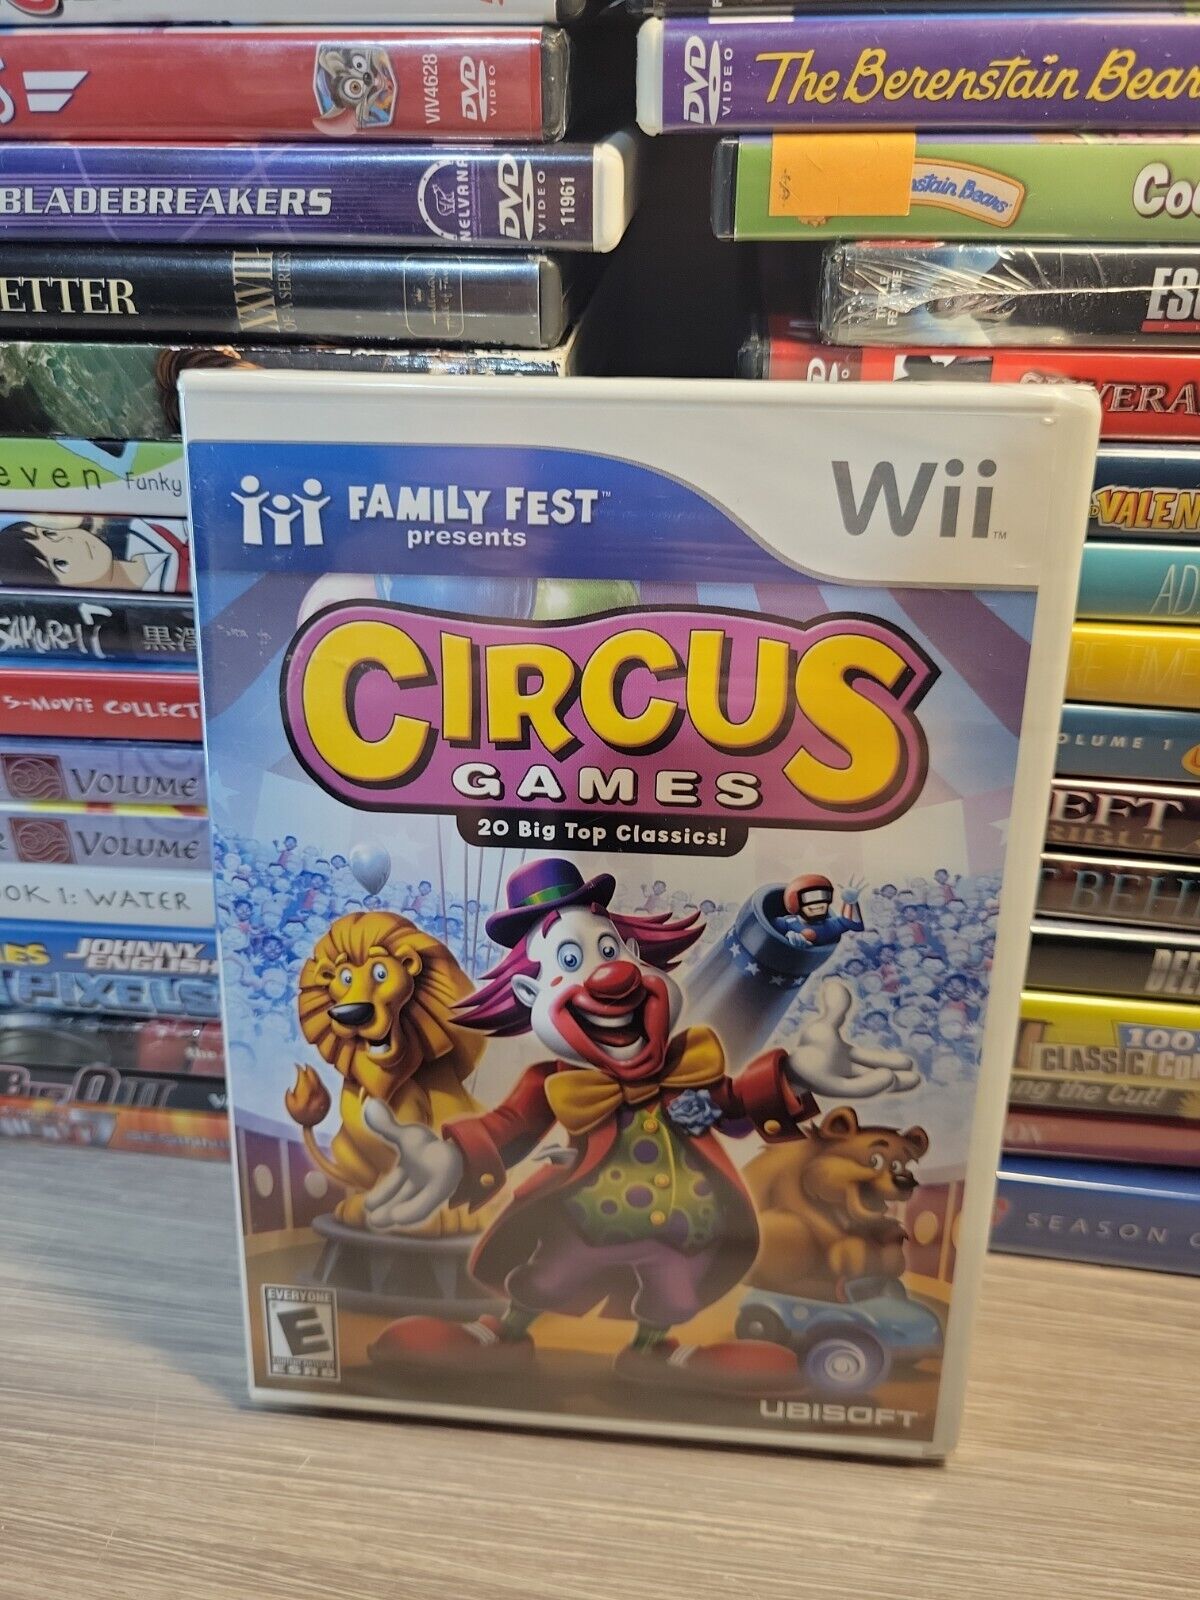 Dij leg uit Bekwaam Family Fest Presents: Circus Games Wii Factory Sealed 8888174615 | eBay